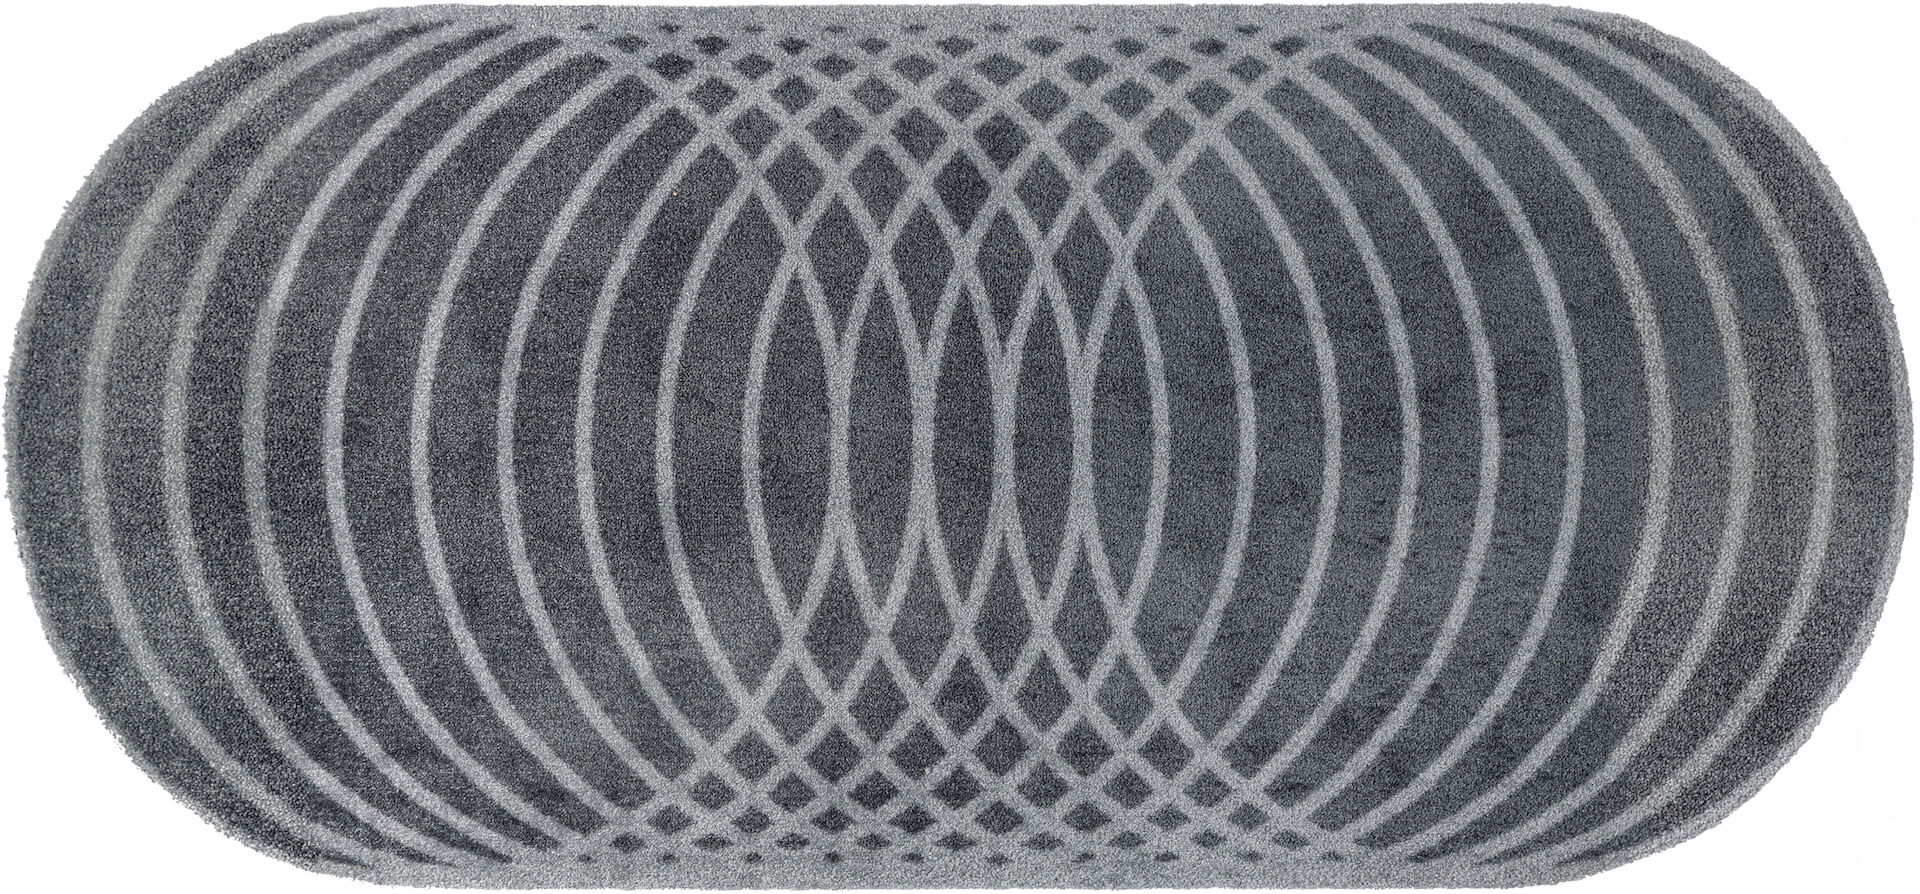 Randlose Fußmatte Calm Loop, ovale Form, 070 x 150 cm, Draufsicht